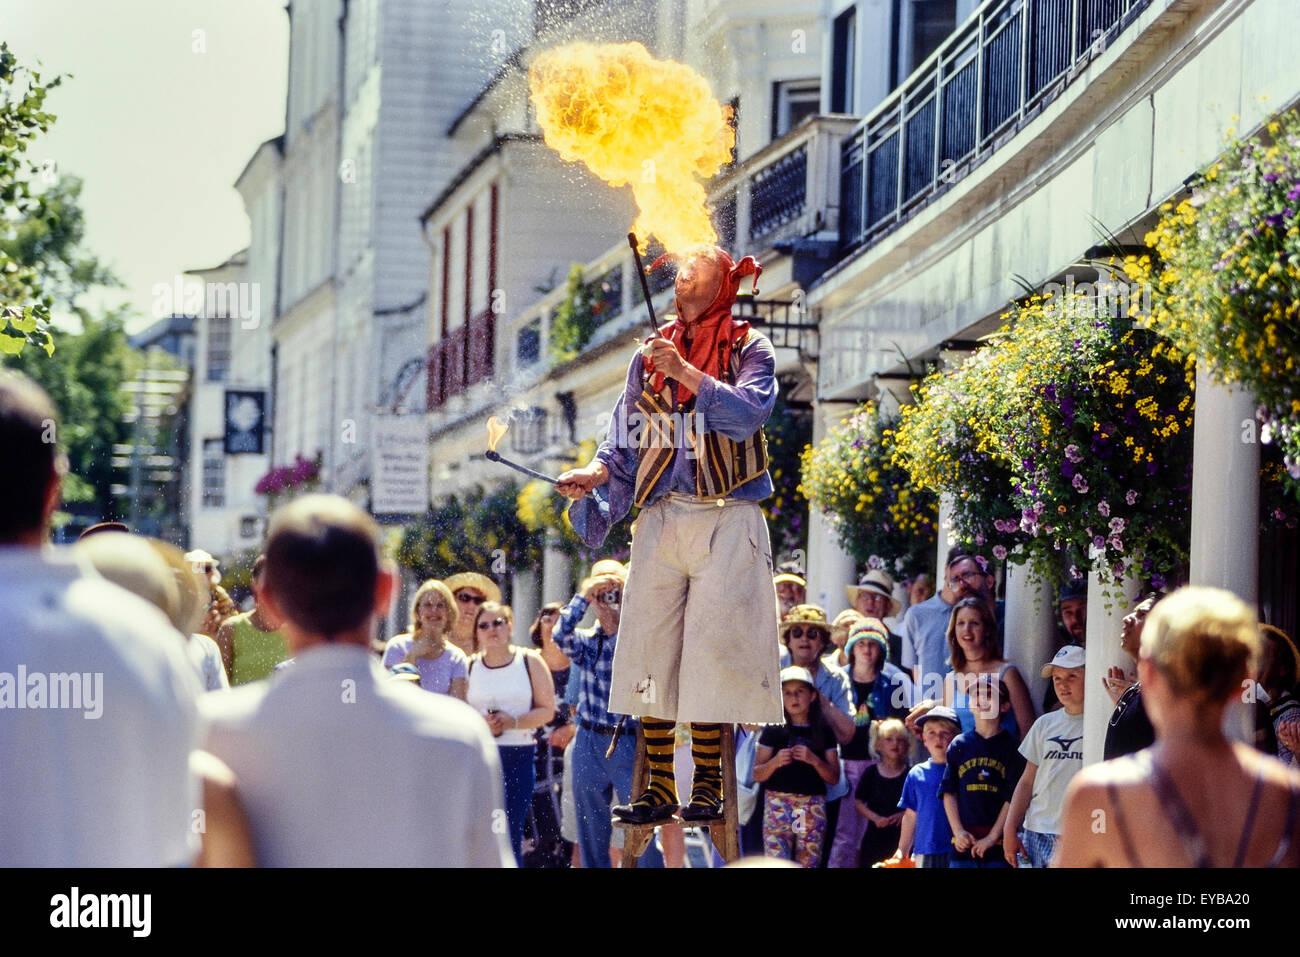 Fire breather on stilts at The Pantiles. Royal Tunbridge Wells. Kent. UK Stock Photo